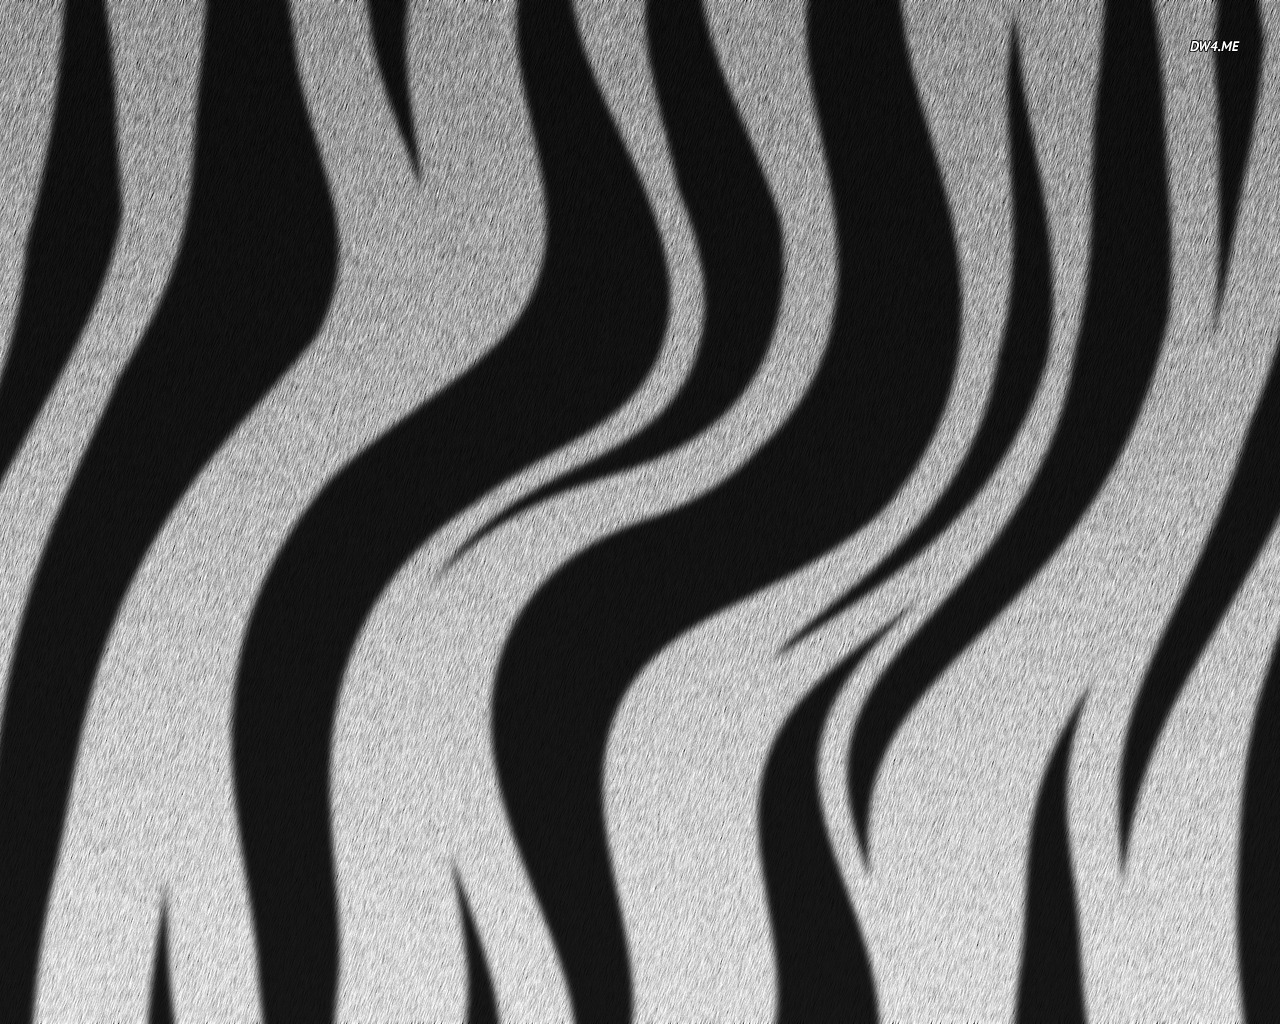 Zebra Stripes Wallpaper Digital Art